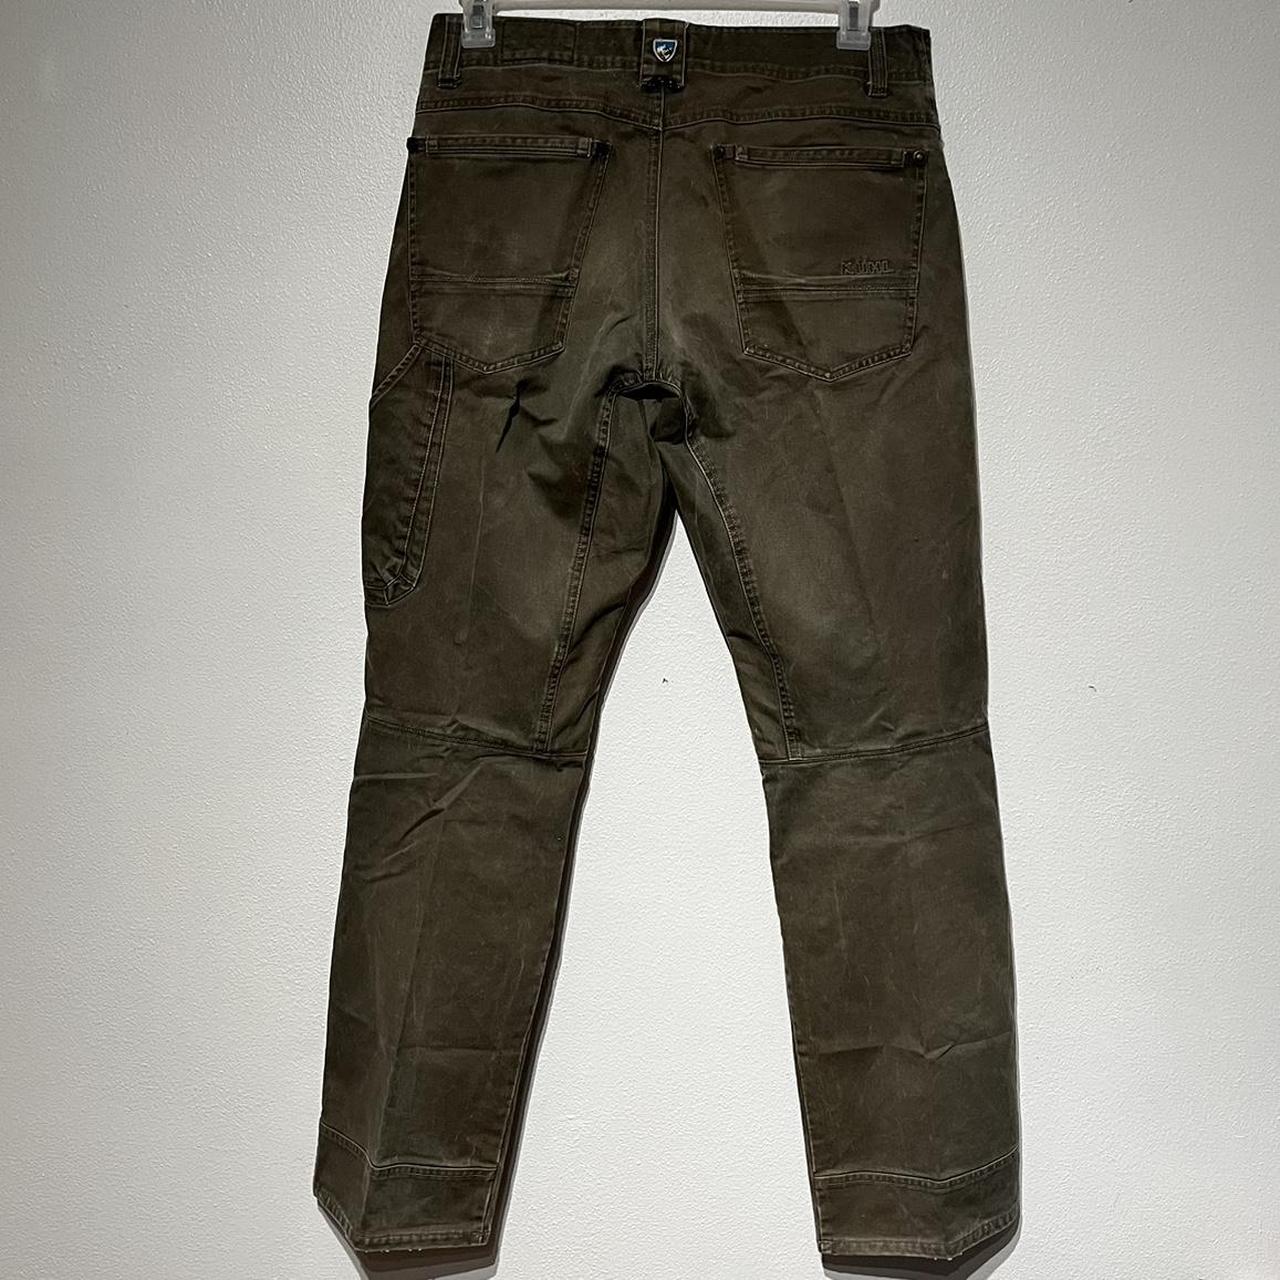 KÜHL Men's Green and Khaki Jeans (2)